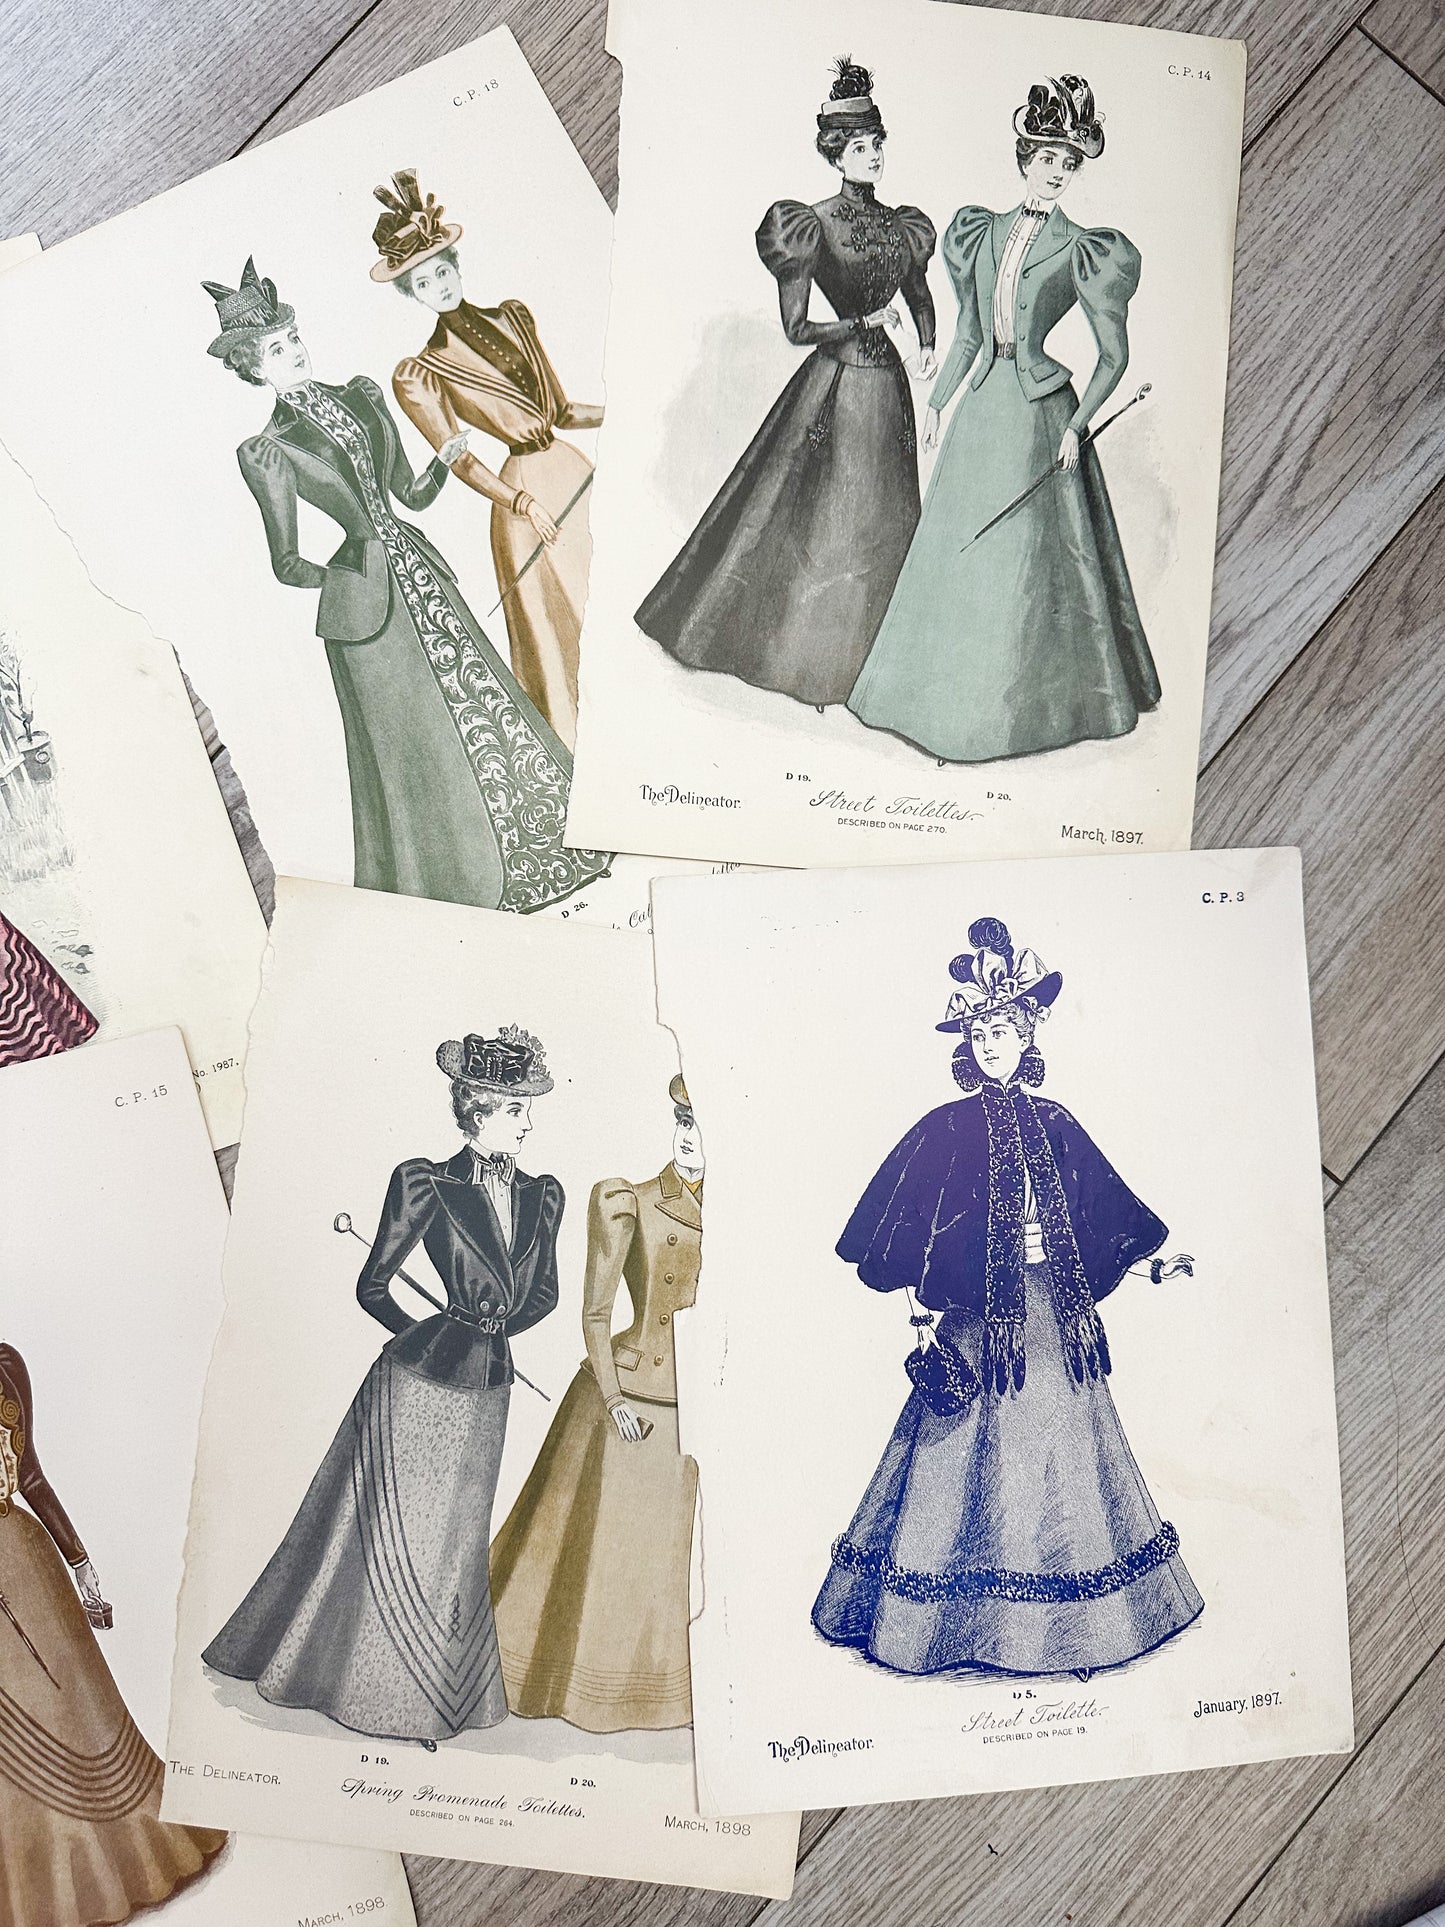 Vintage Fashion Prints (Set of 8)